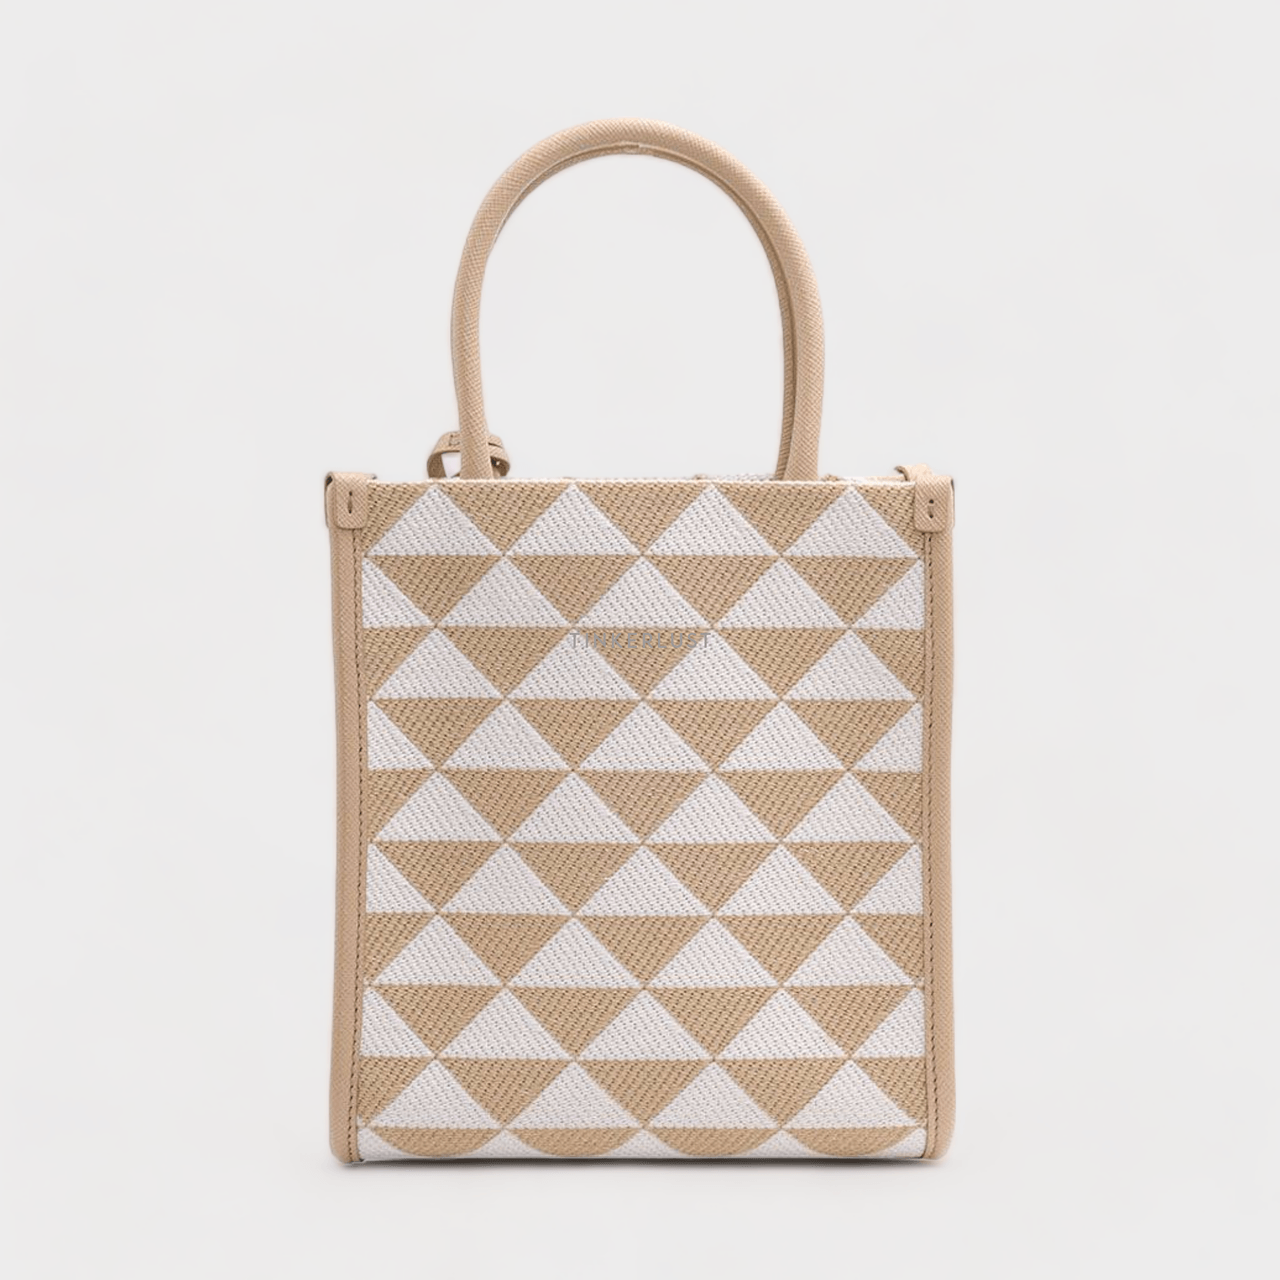 Prada Mini Symbole Pattern Tote Bag in Beige/Chalk White Embroidered Fabric Satchel